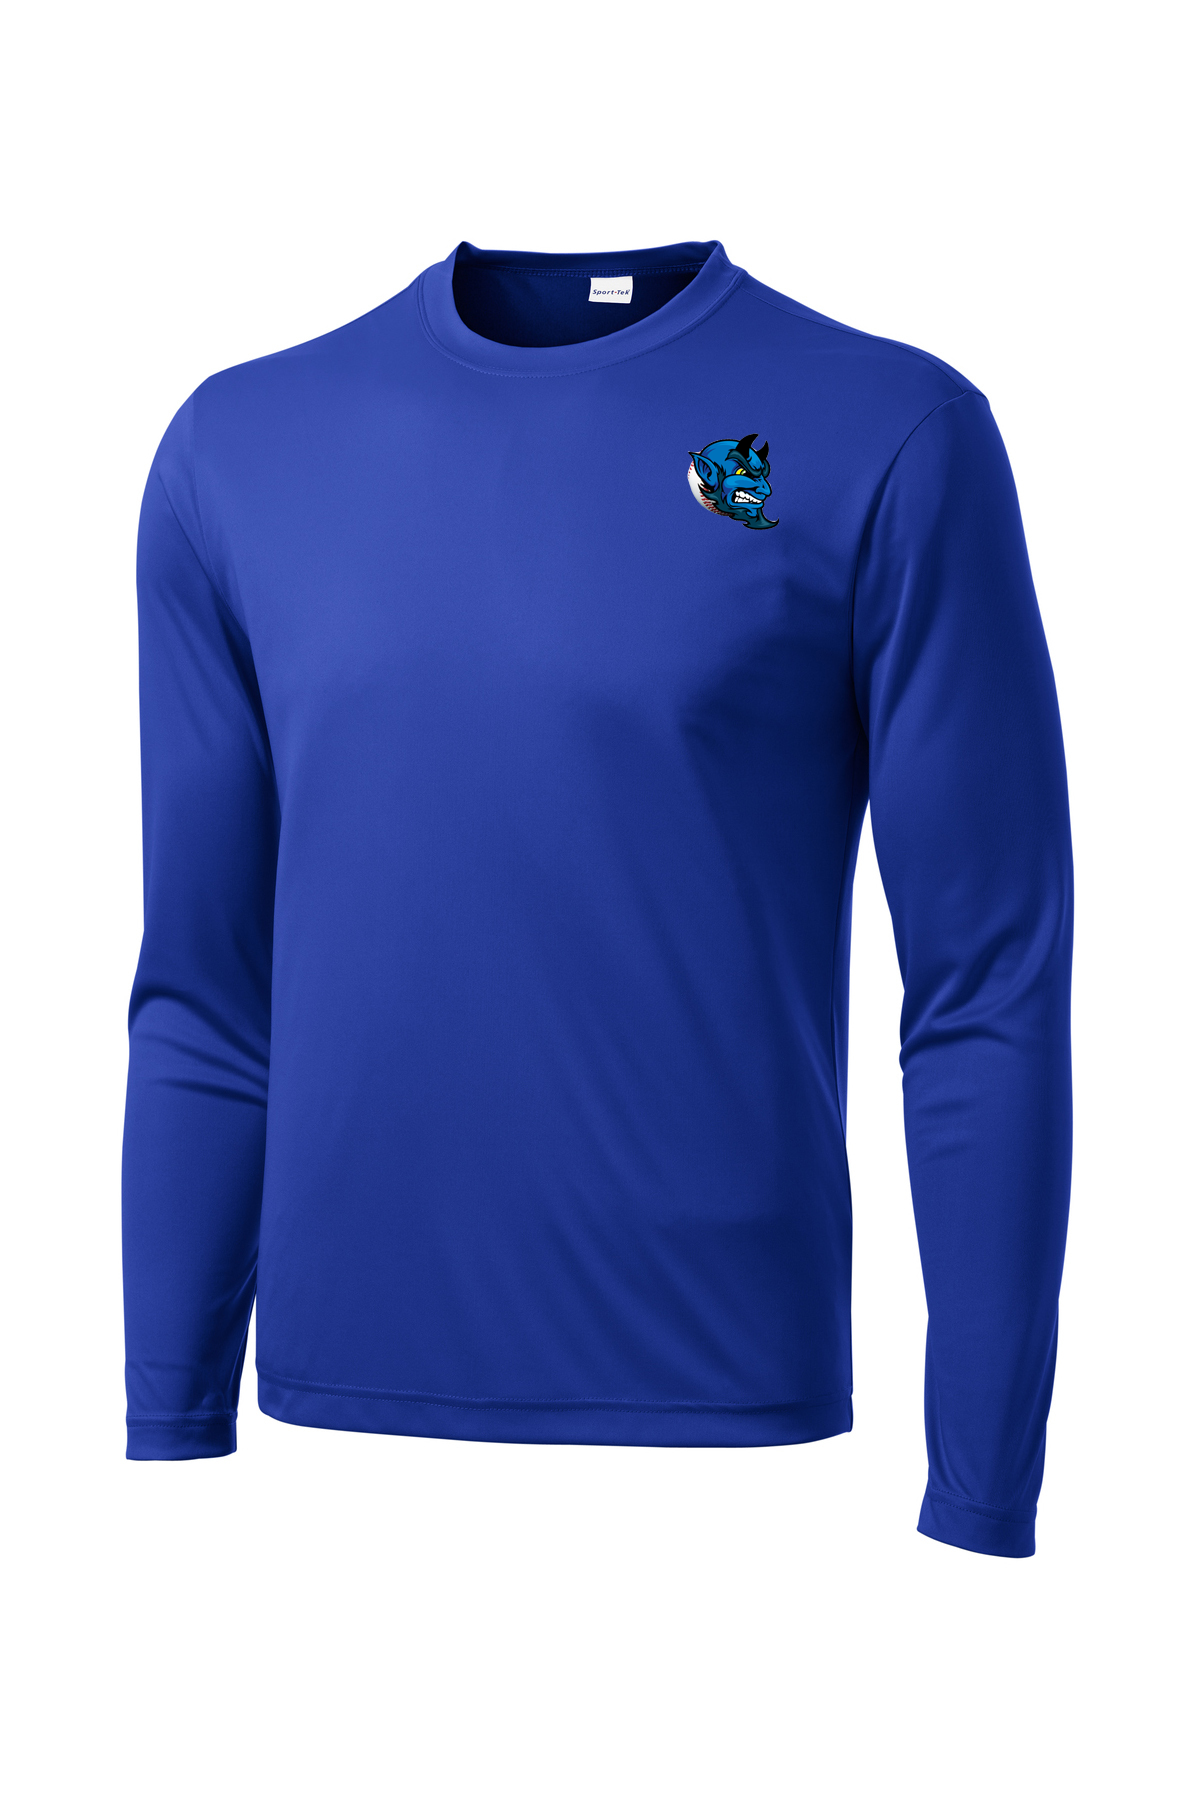 Blue Devils Baseball Long Sleeve Performance Shirt